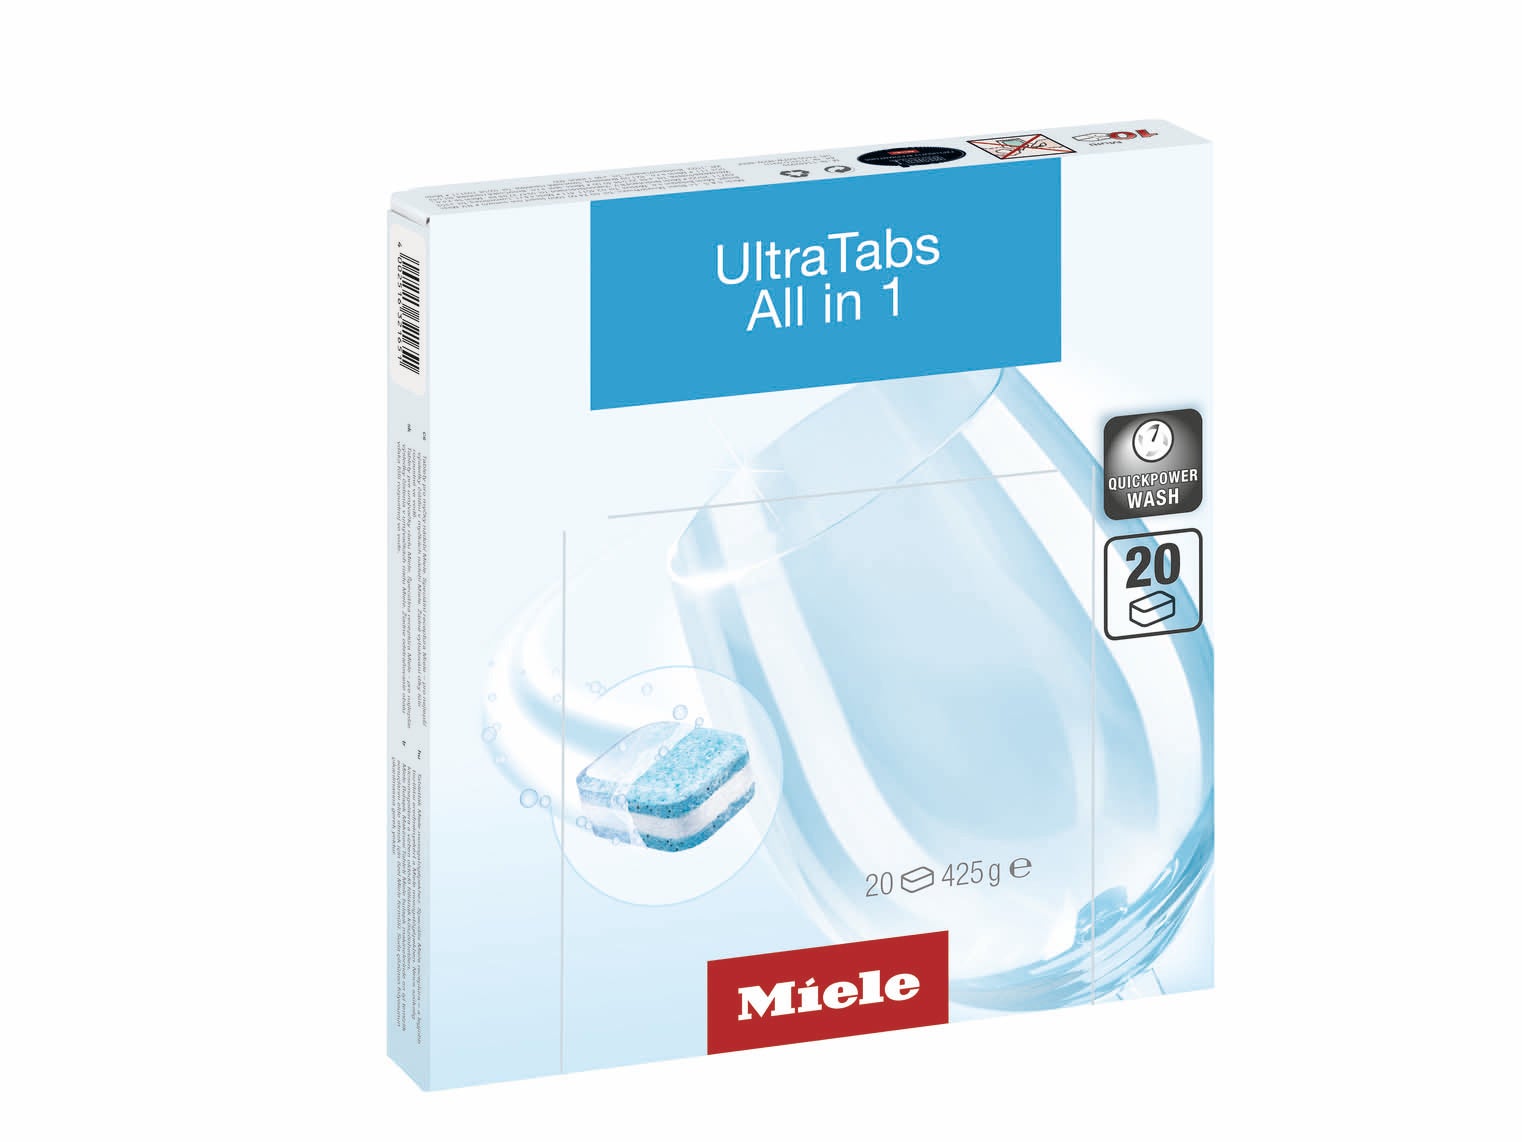 Miele UltraTabs All in One - 20 Pack.jpg